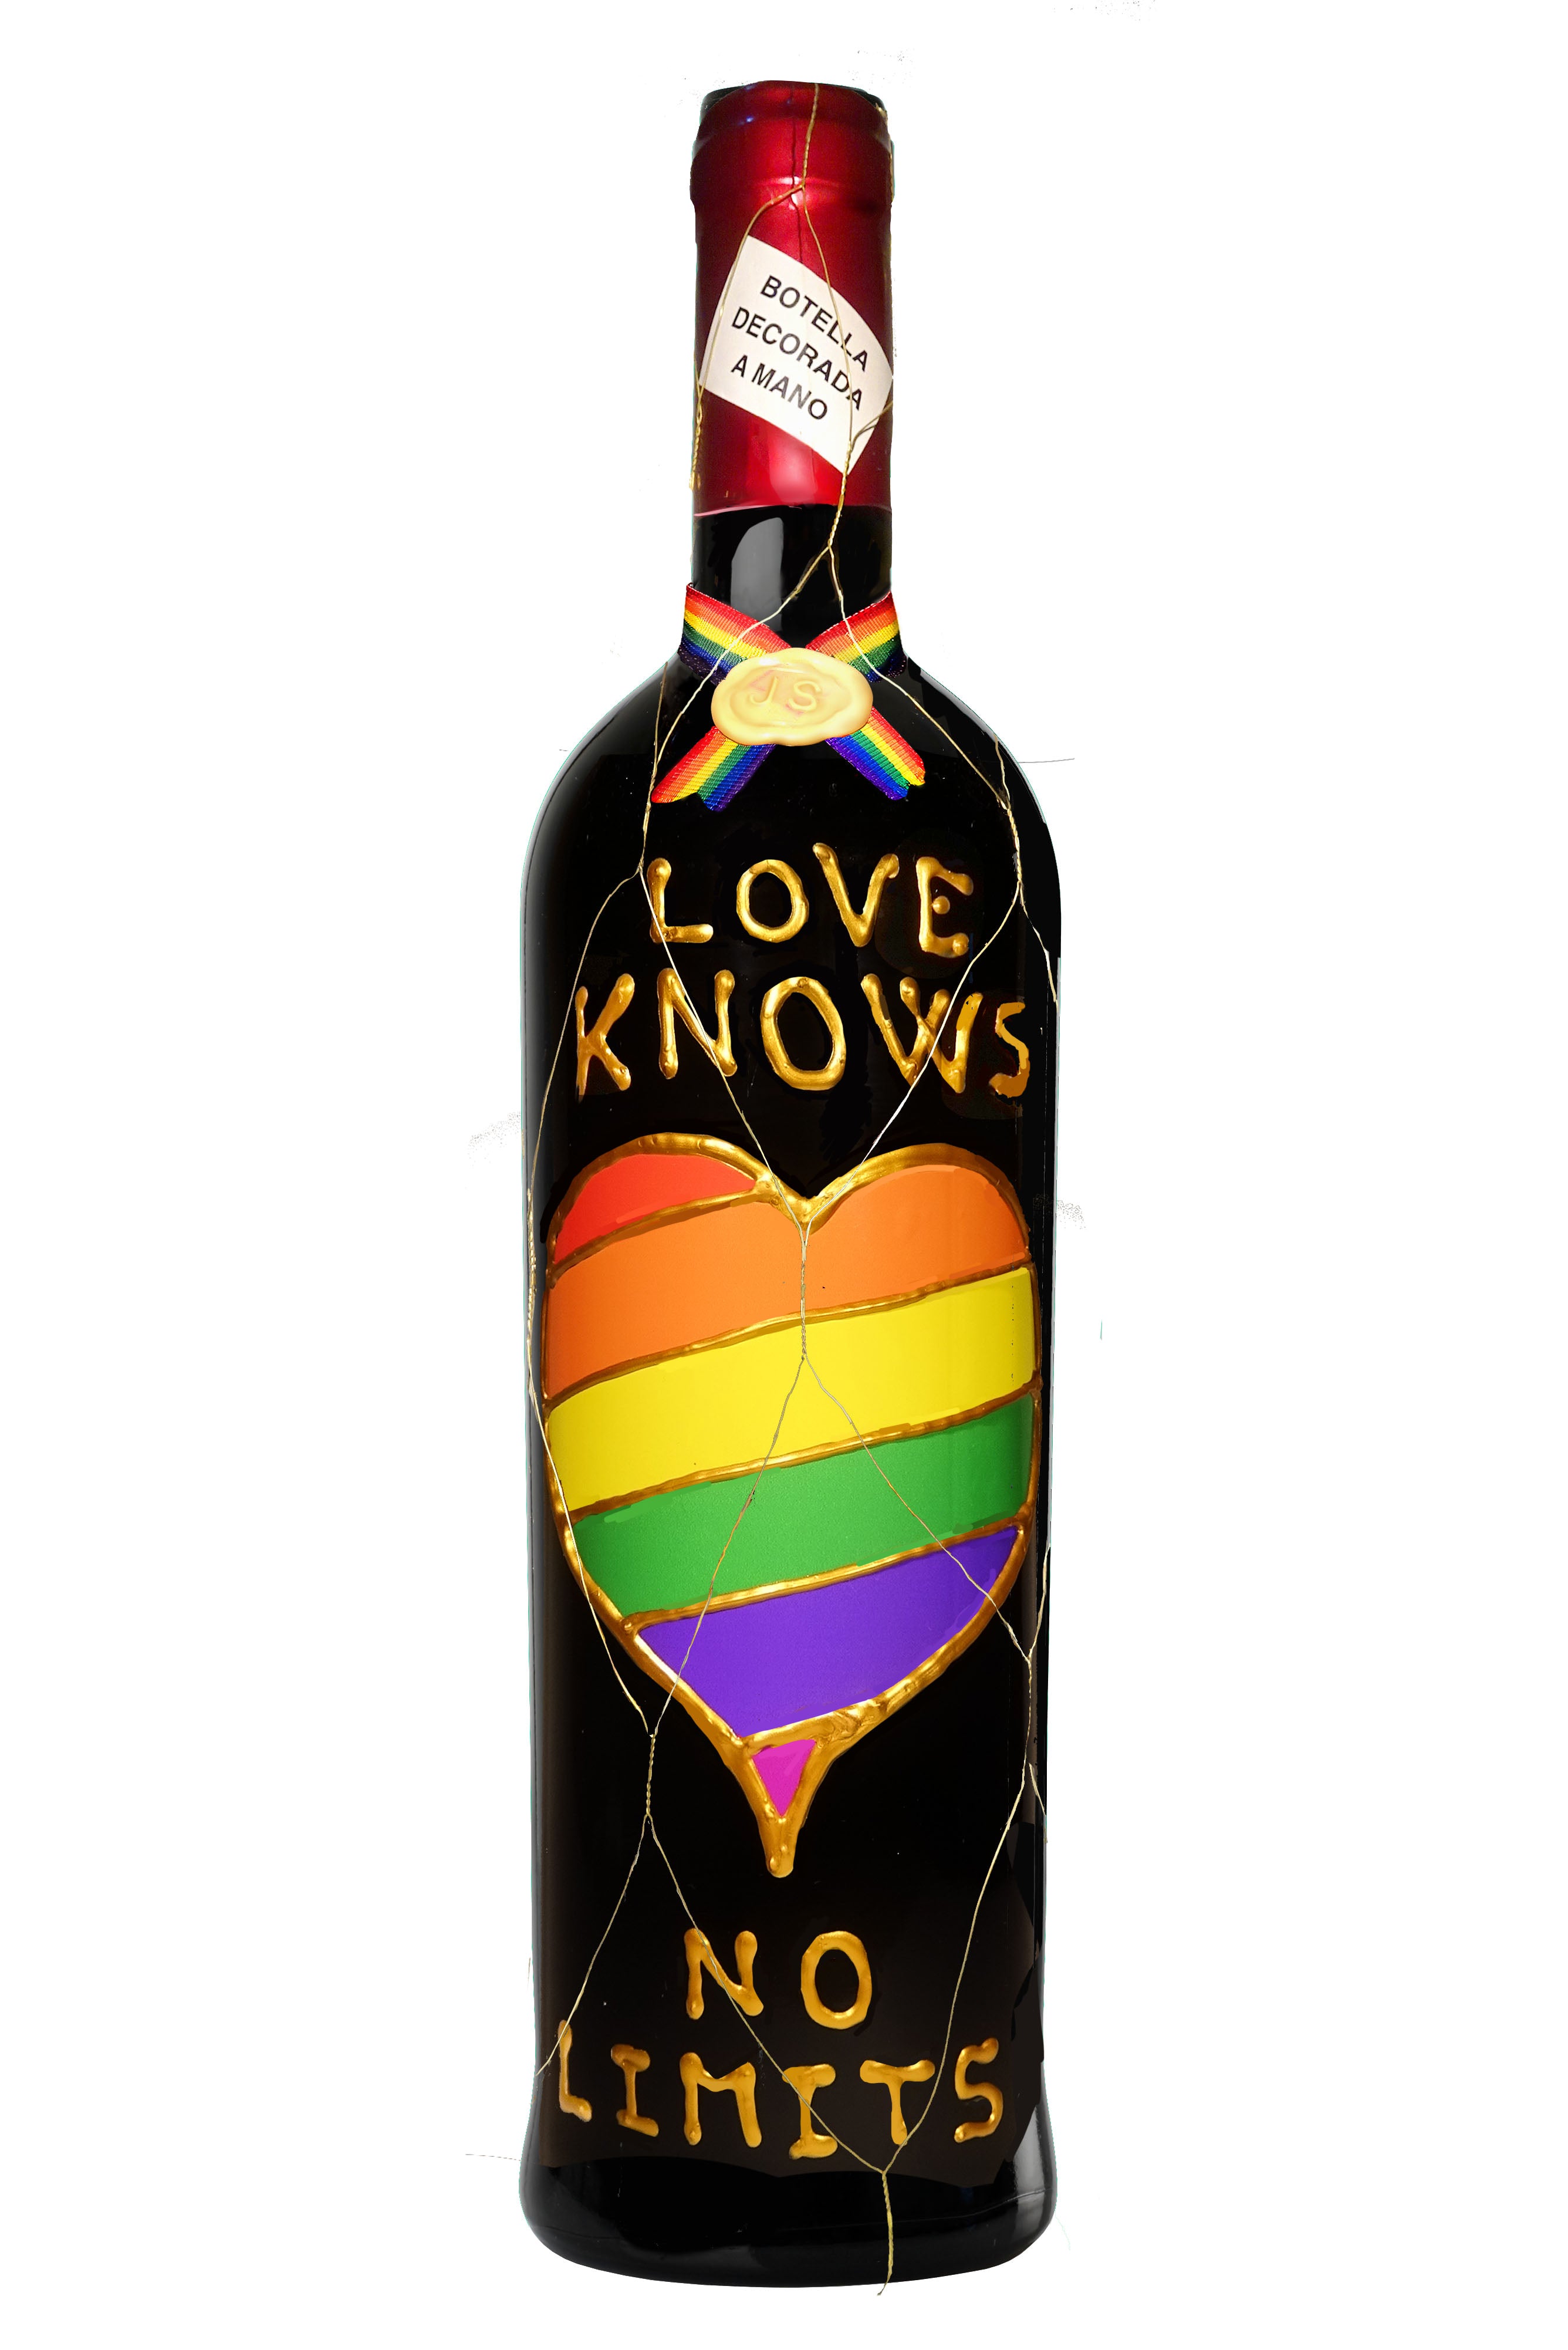 Botella Vino Jumilla Regalo Bandera LGTBI (Love Knows no Limits) - Delampa